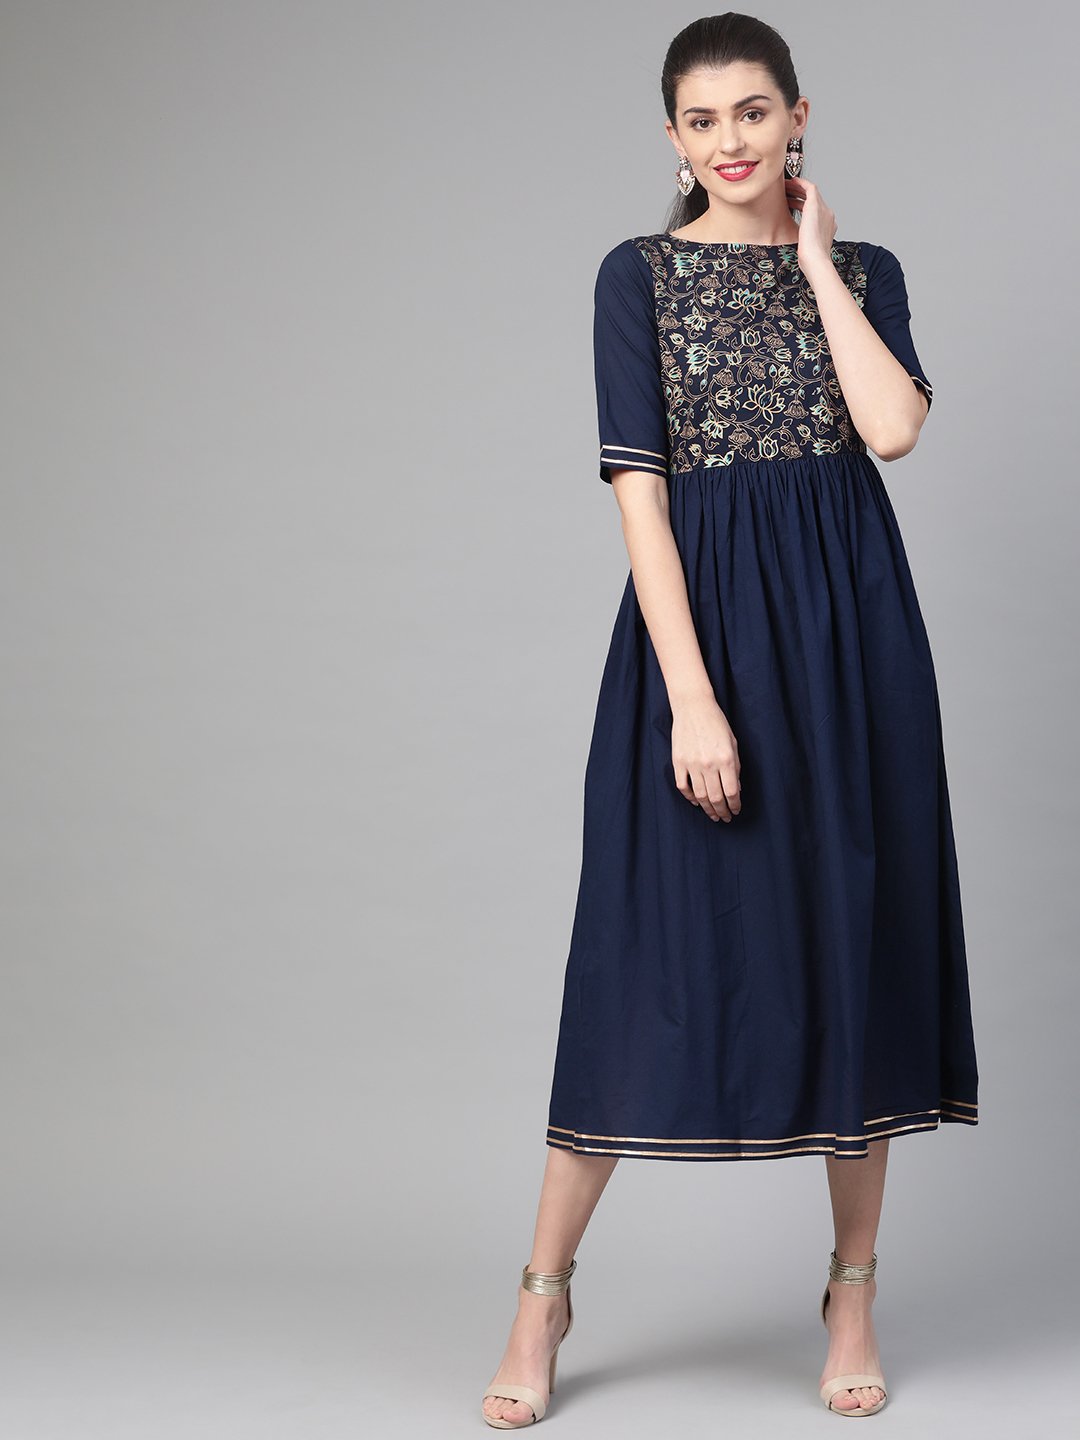 Women's Nayo Navy Blue & Gold Floral Printed Maxi Dress - Nayo Clothing